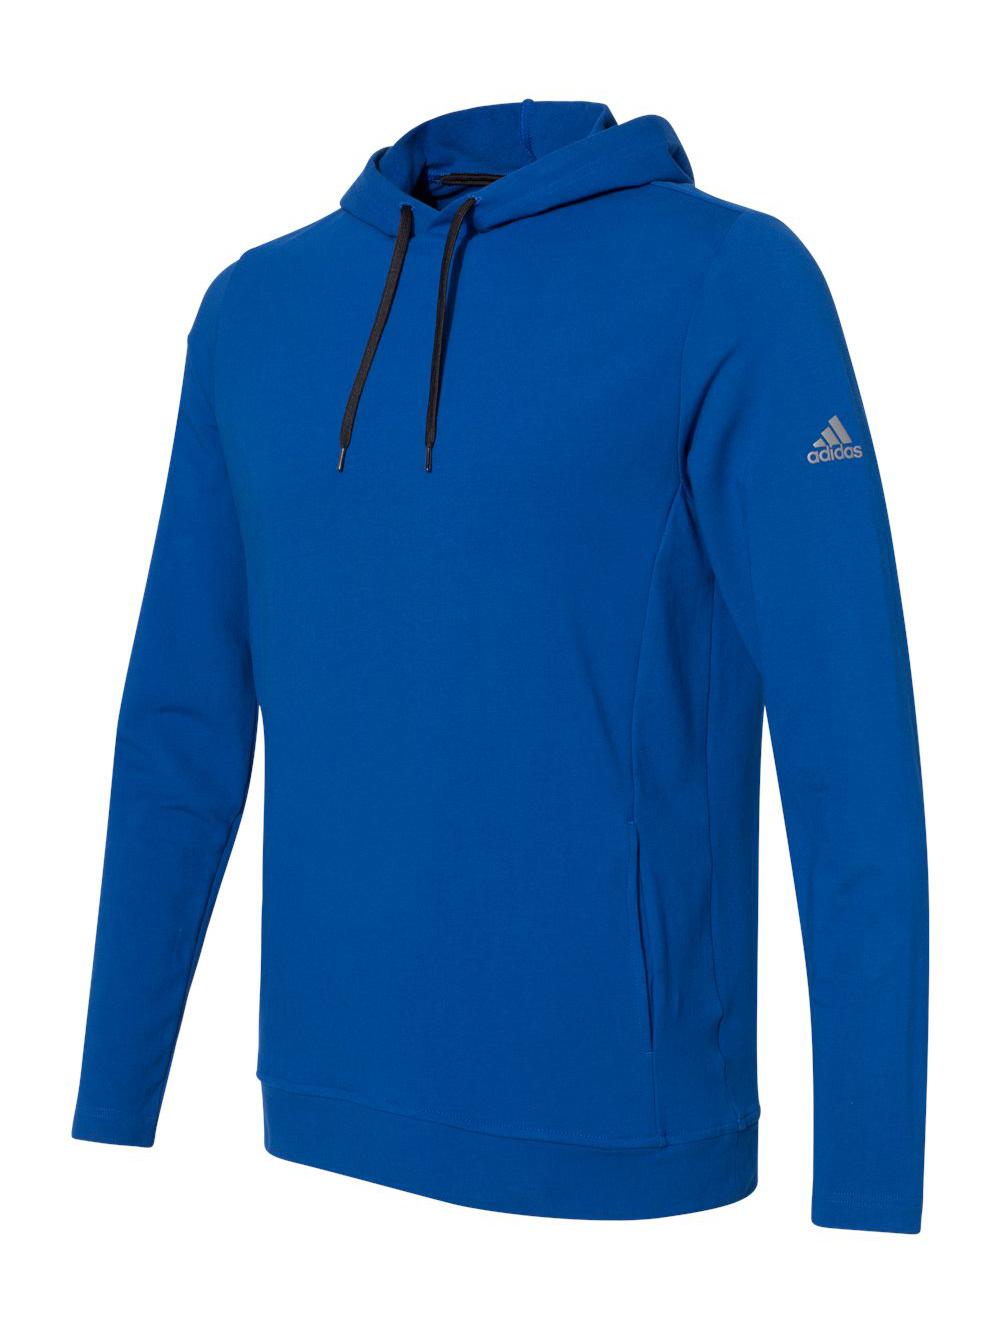 Adidas - Lightweight Hooded Sweatshirt - A450 - Collegiate Royal - Size: XL - image 1 of 3